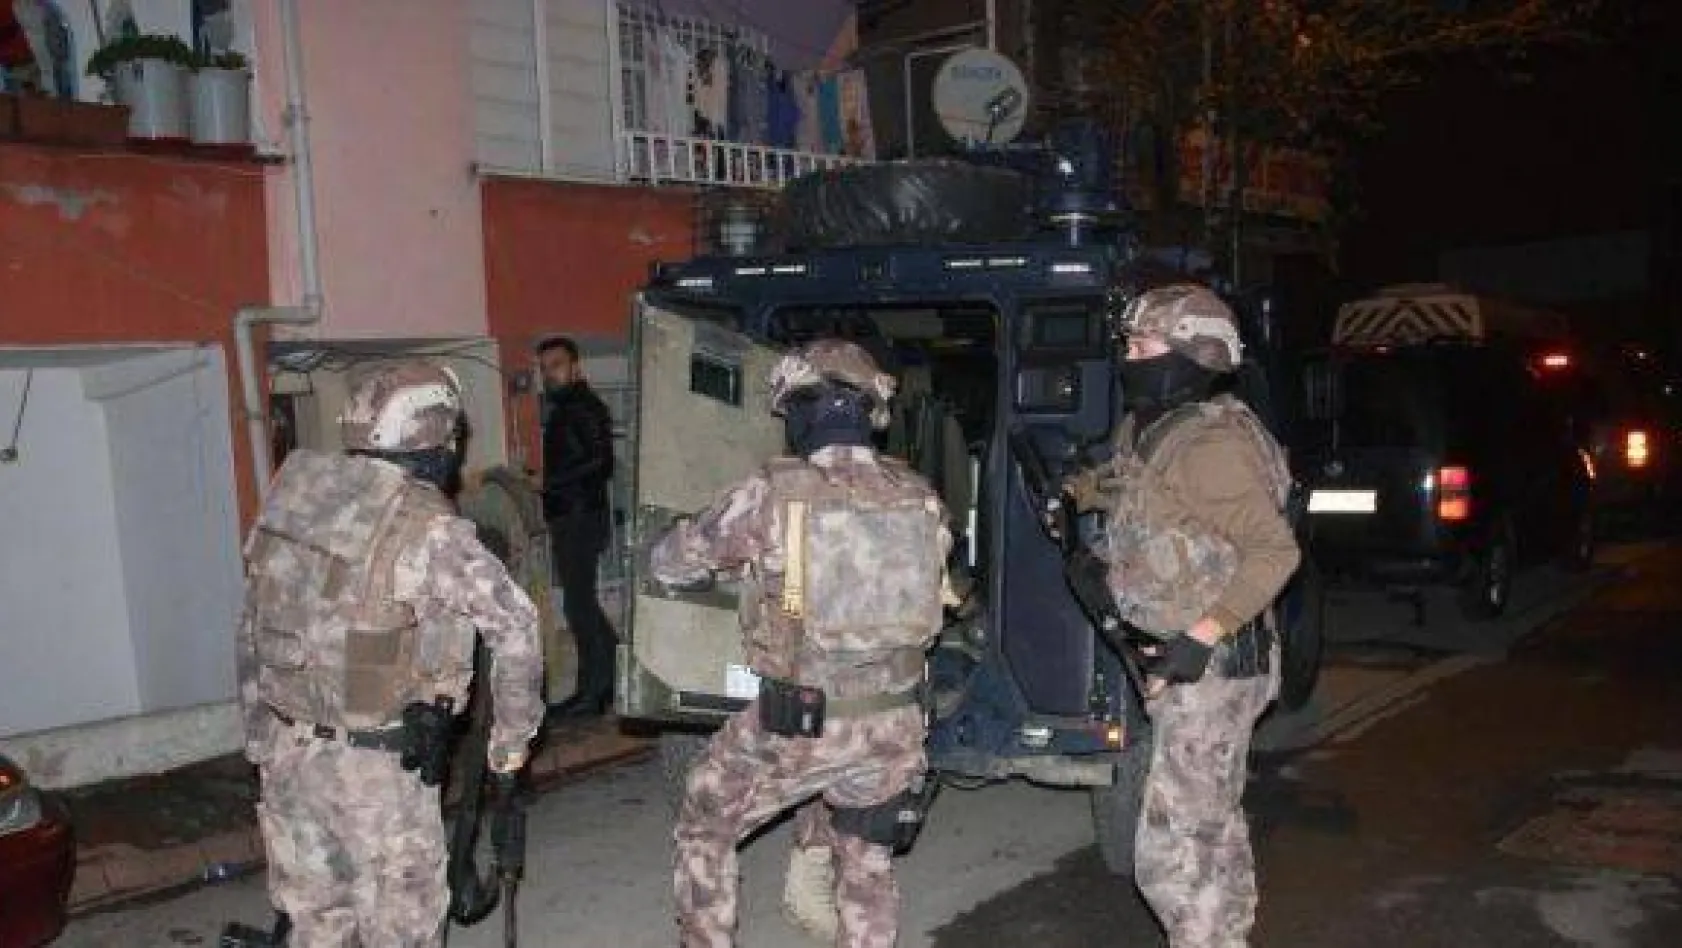 İstanbul'da narkotik operasyonu